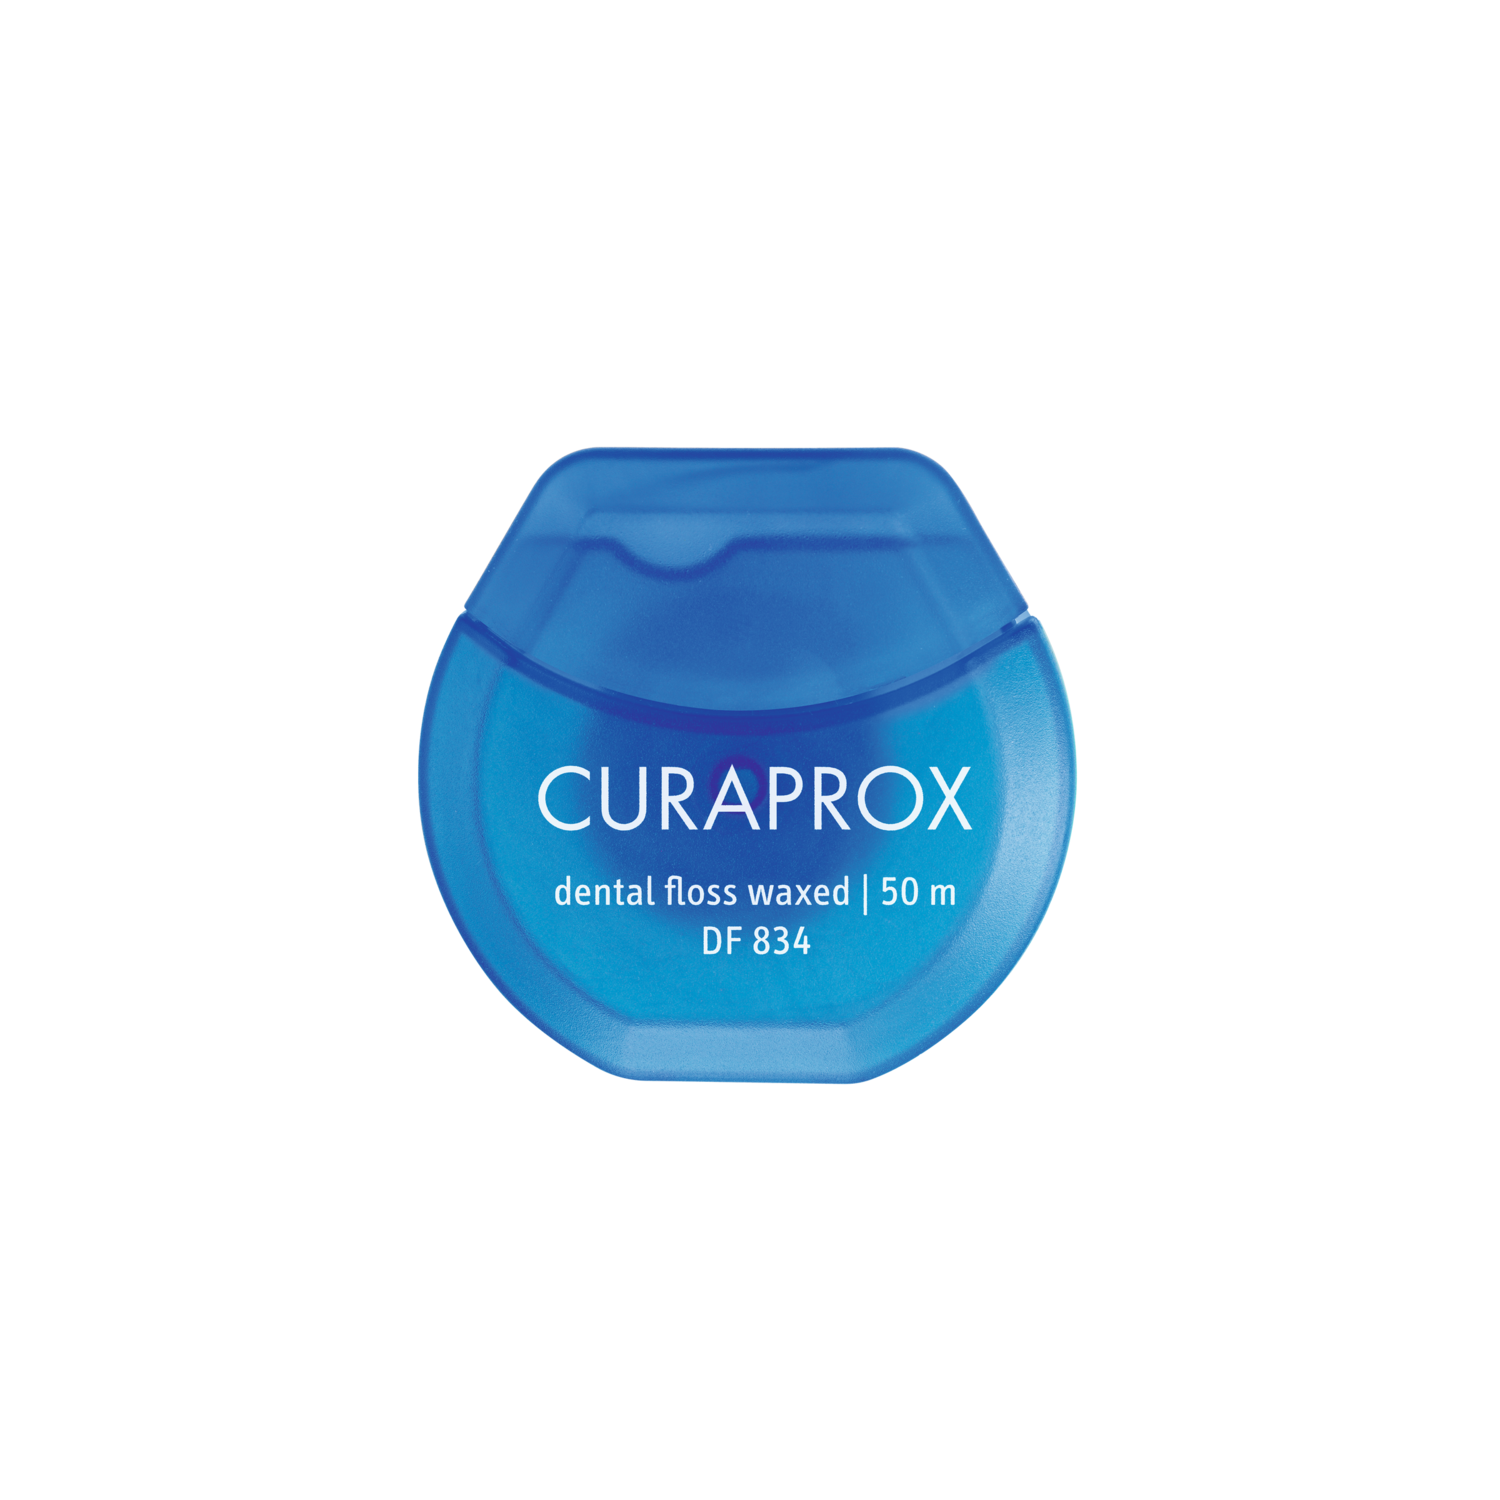 Curaprox - DF 834 dental floss waxed